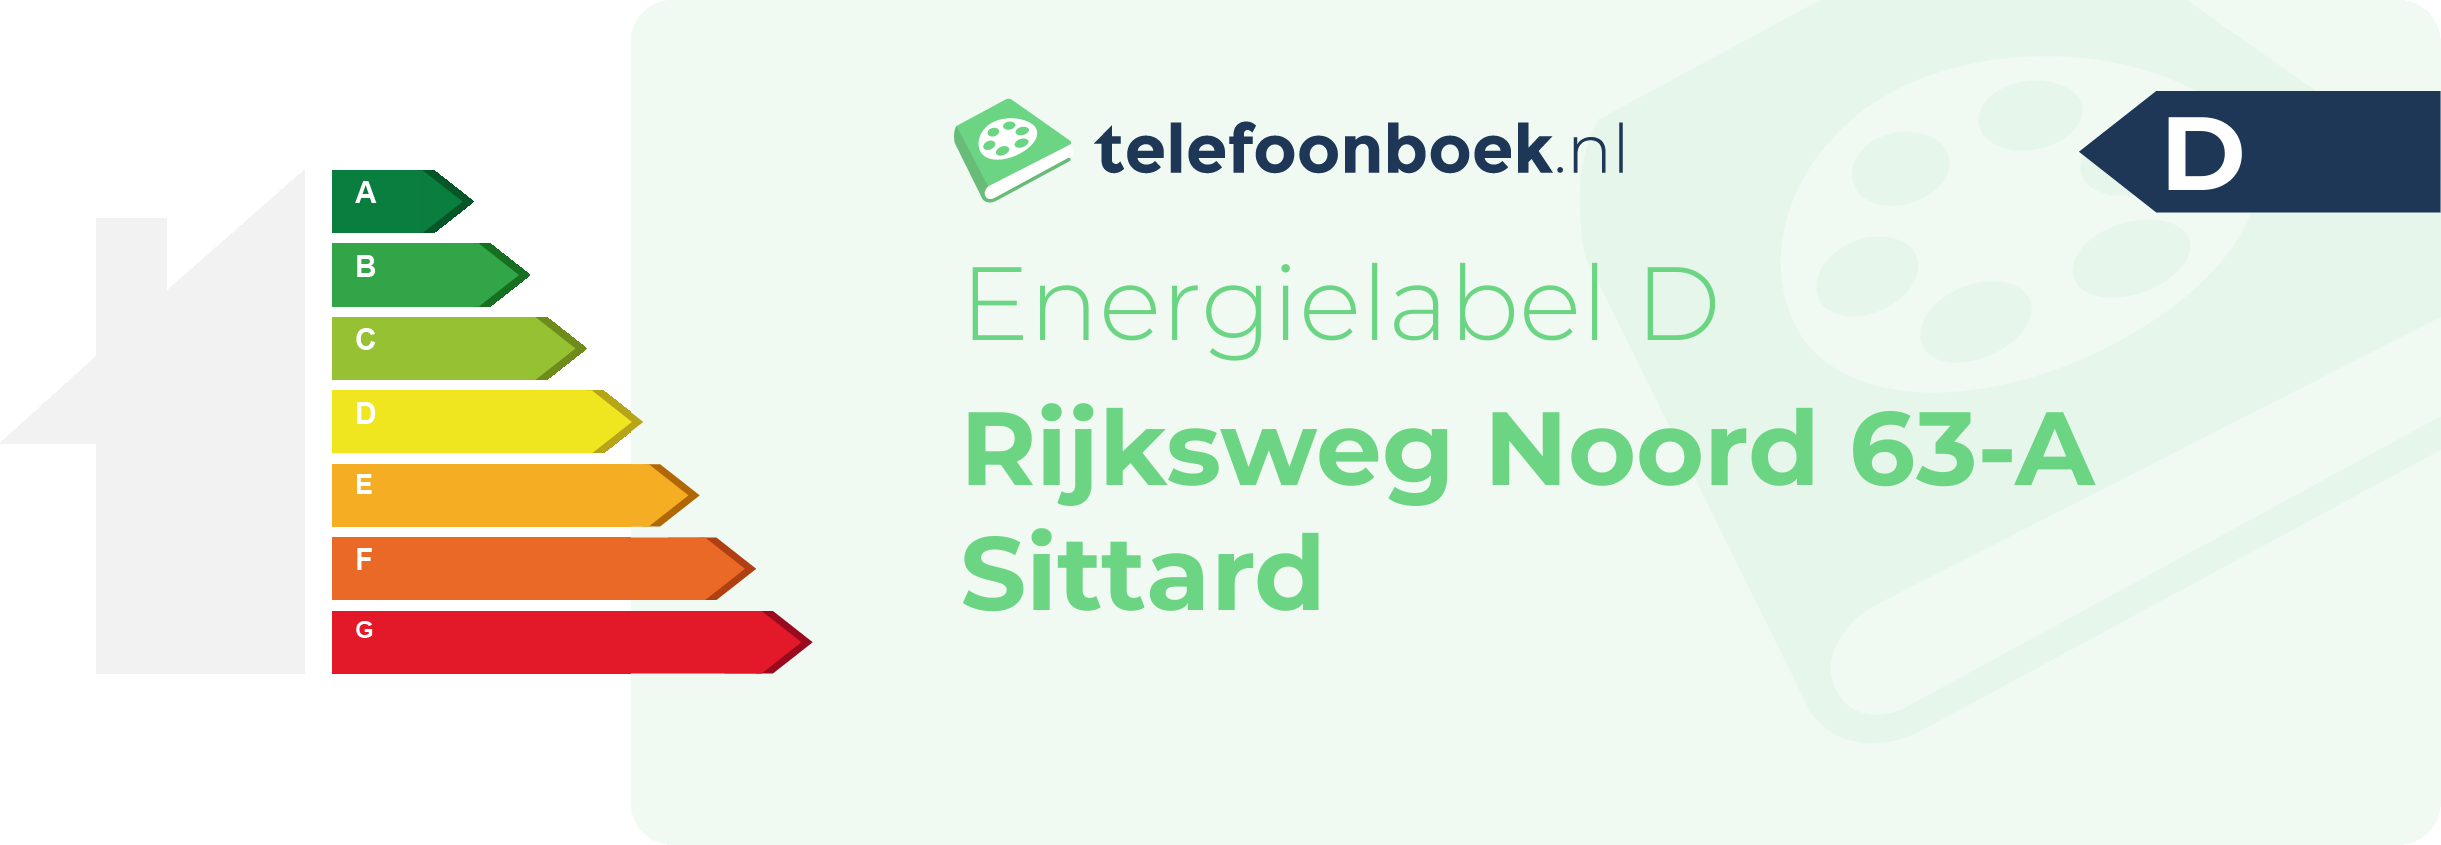 Energielabel Rijksweg Noord 63-A Sittard